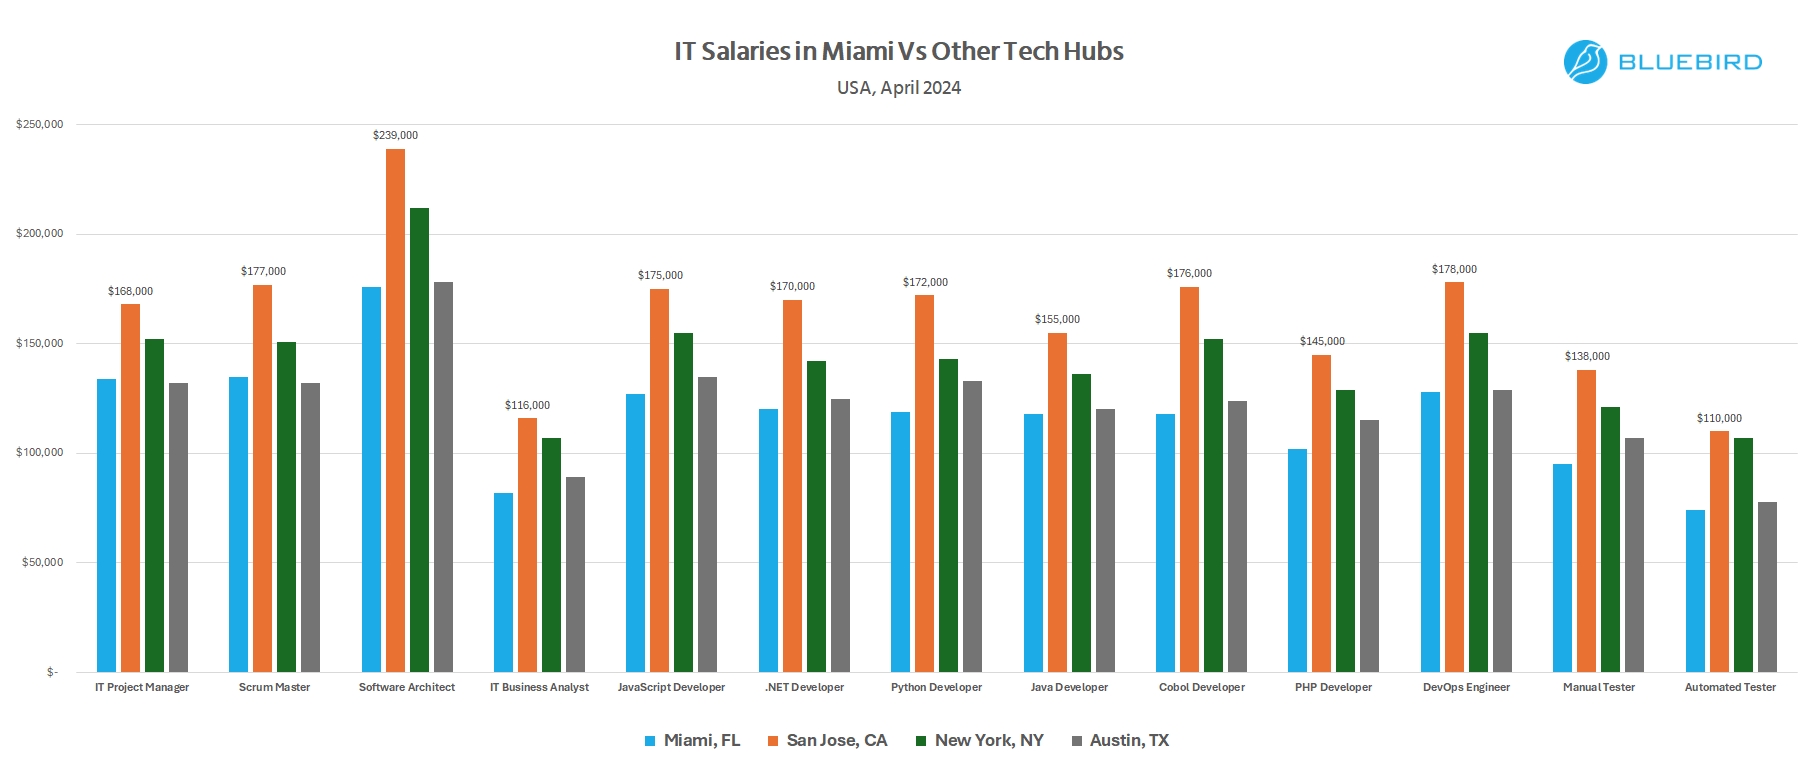 IT Salaries in Miami vs Other Tech Hubs - Bluebird